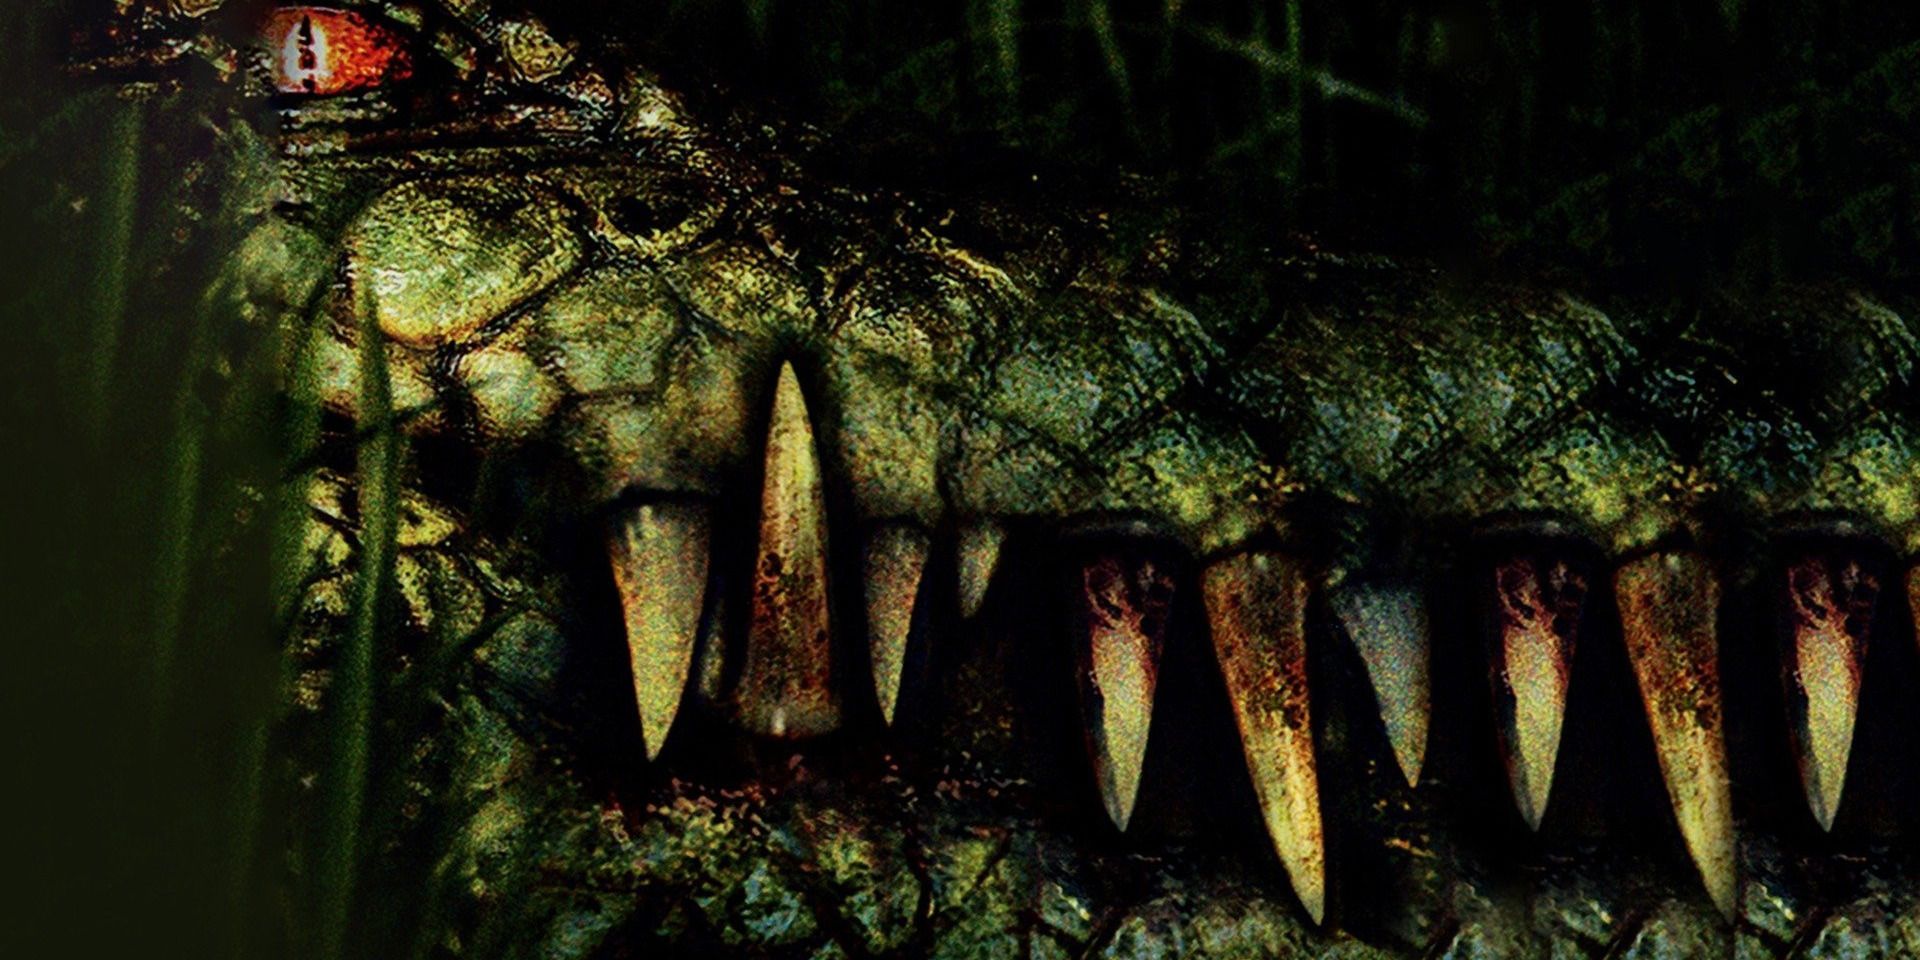 11 Best Crocodile/Alligator Horror Movies Ranked